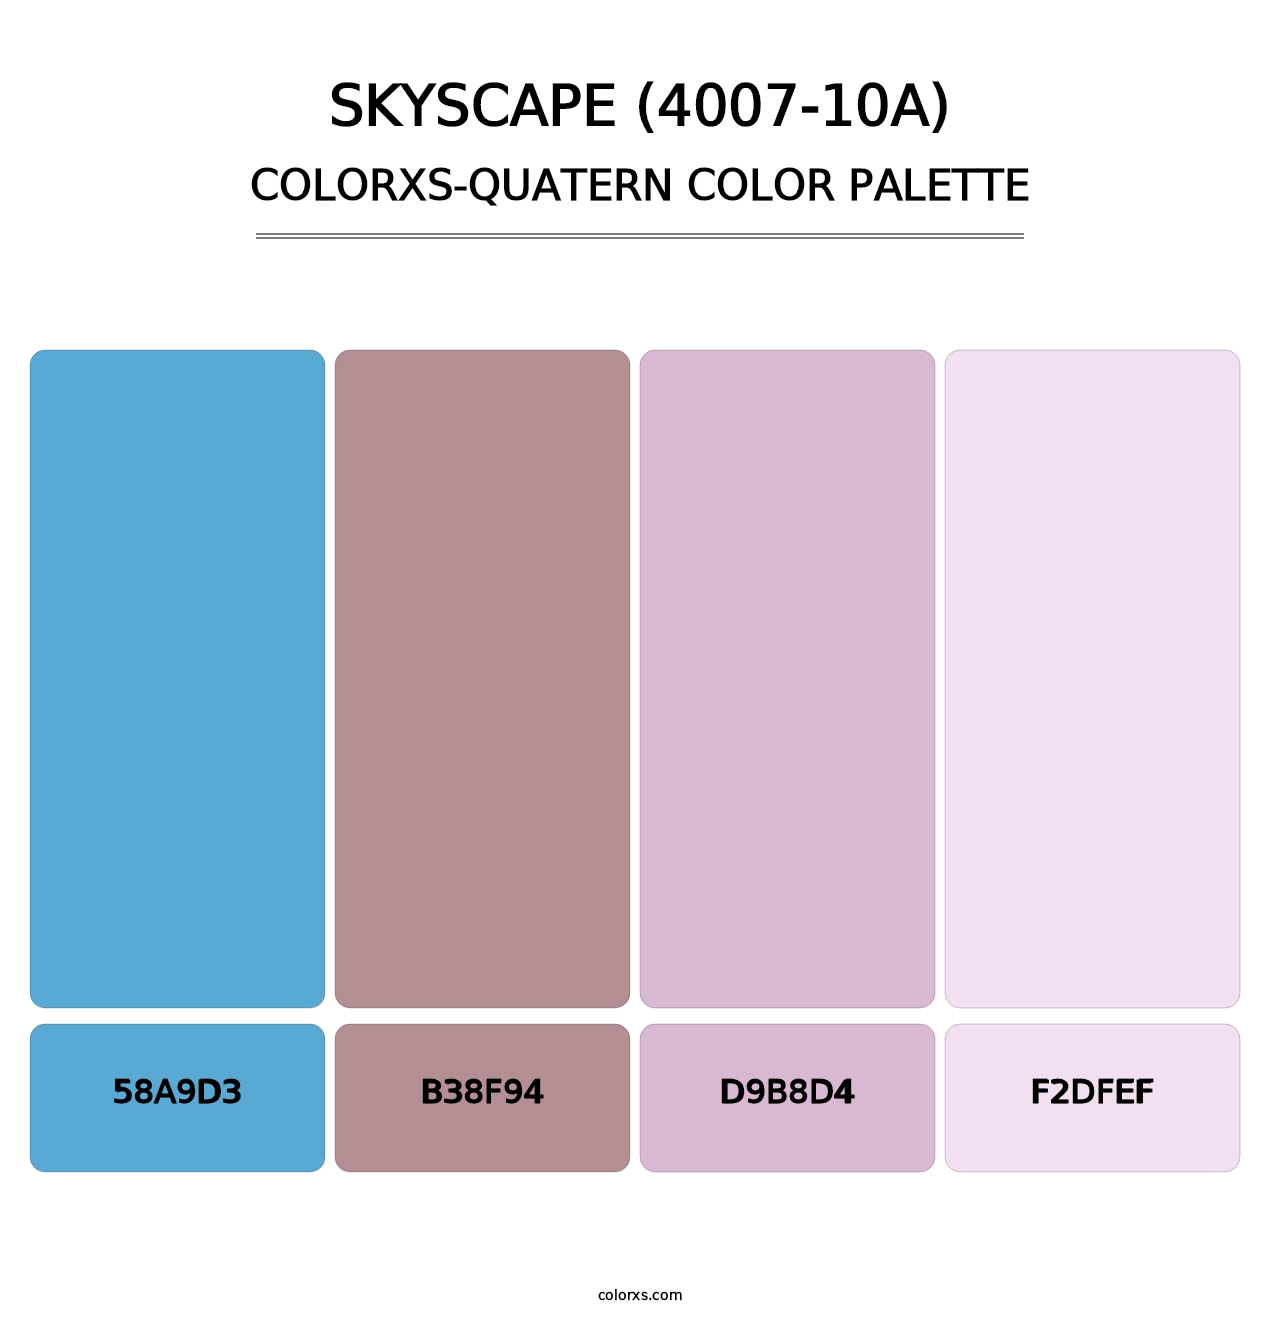 Skyscape (4007-10A) - Colorxs Quatern Palette